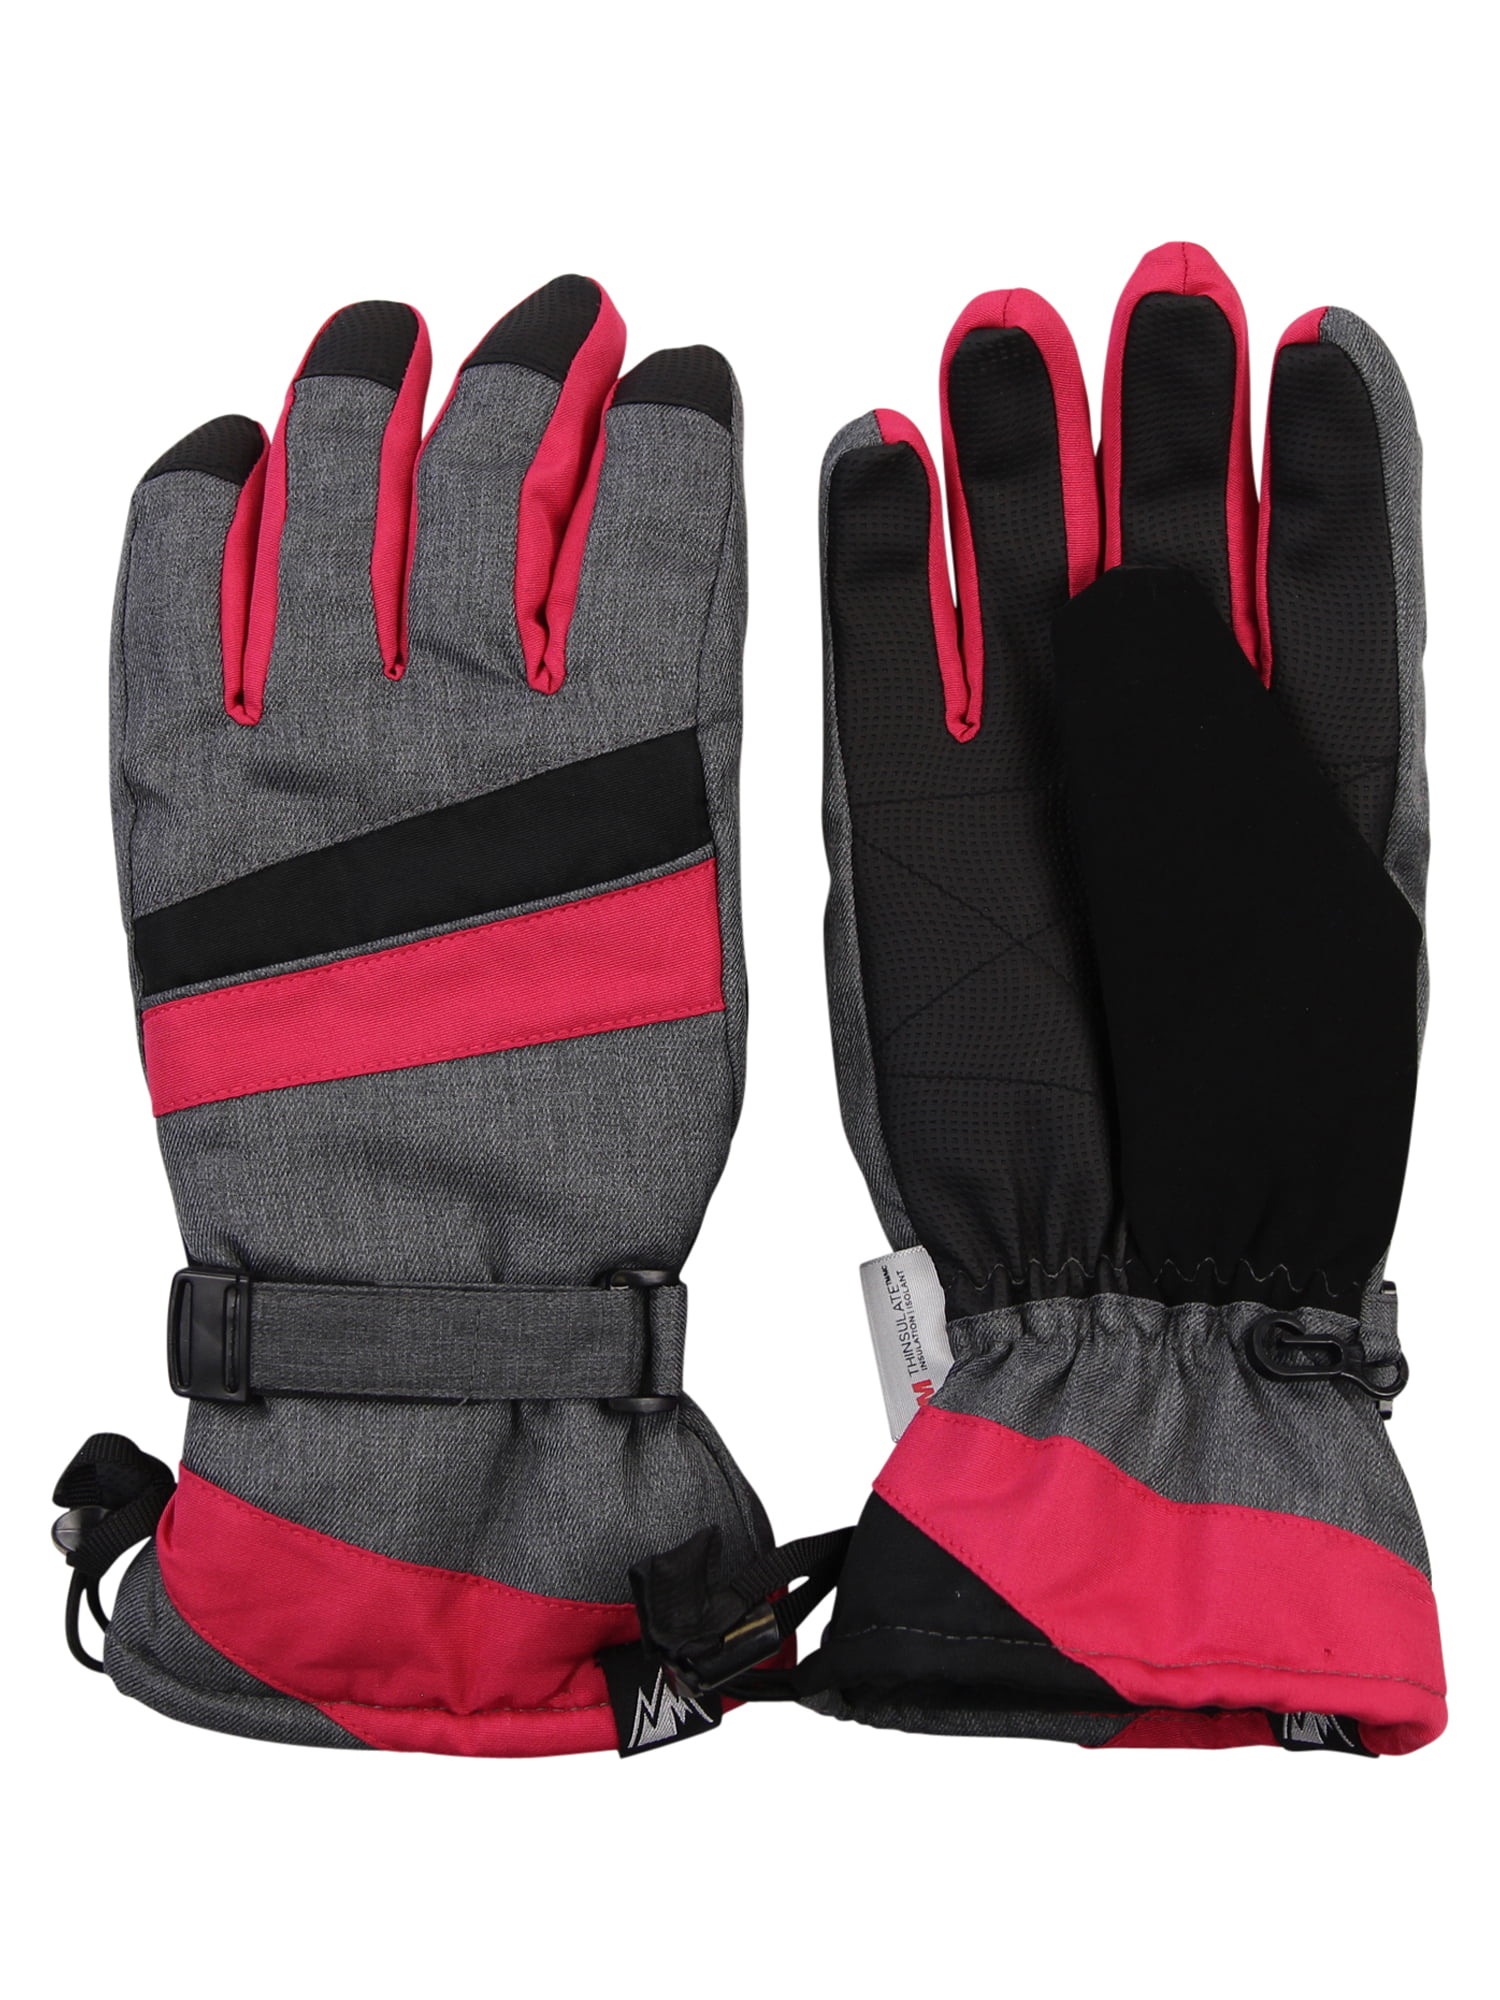 Men Women 30℃ Winter Warm Ski Gloves Waterproof Snowboard Brand Head Gloves 